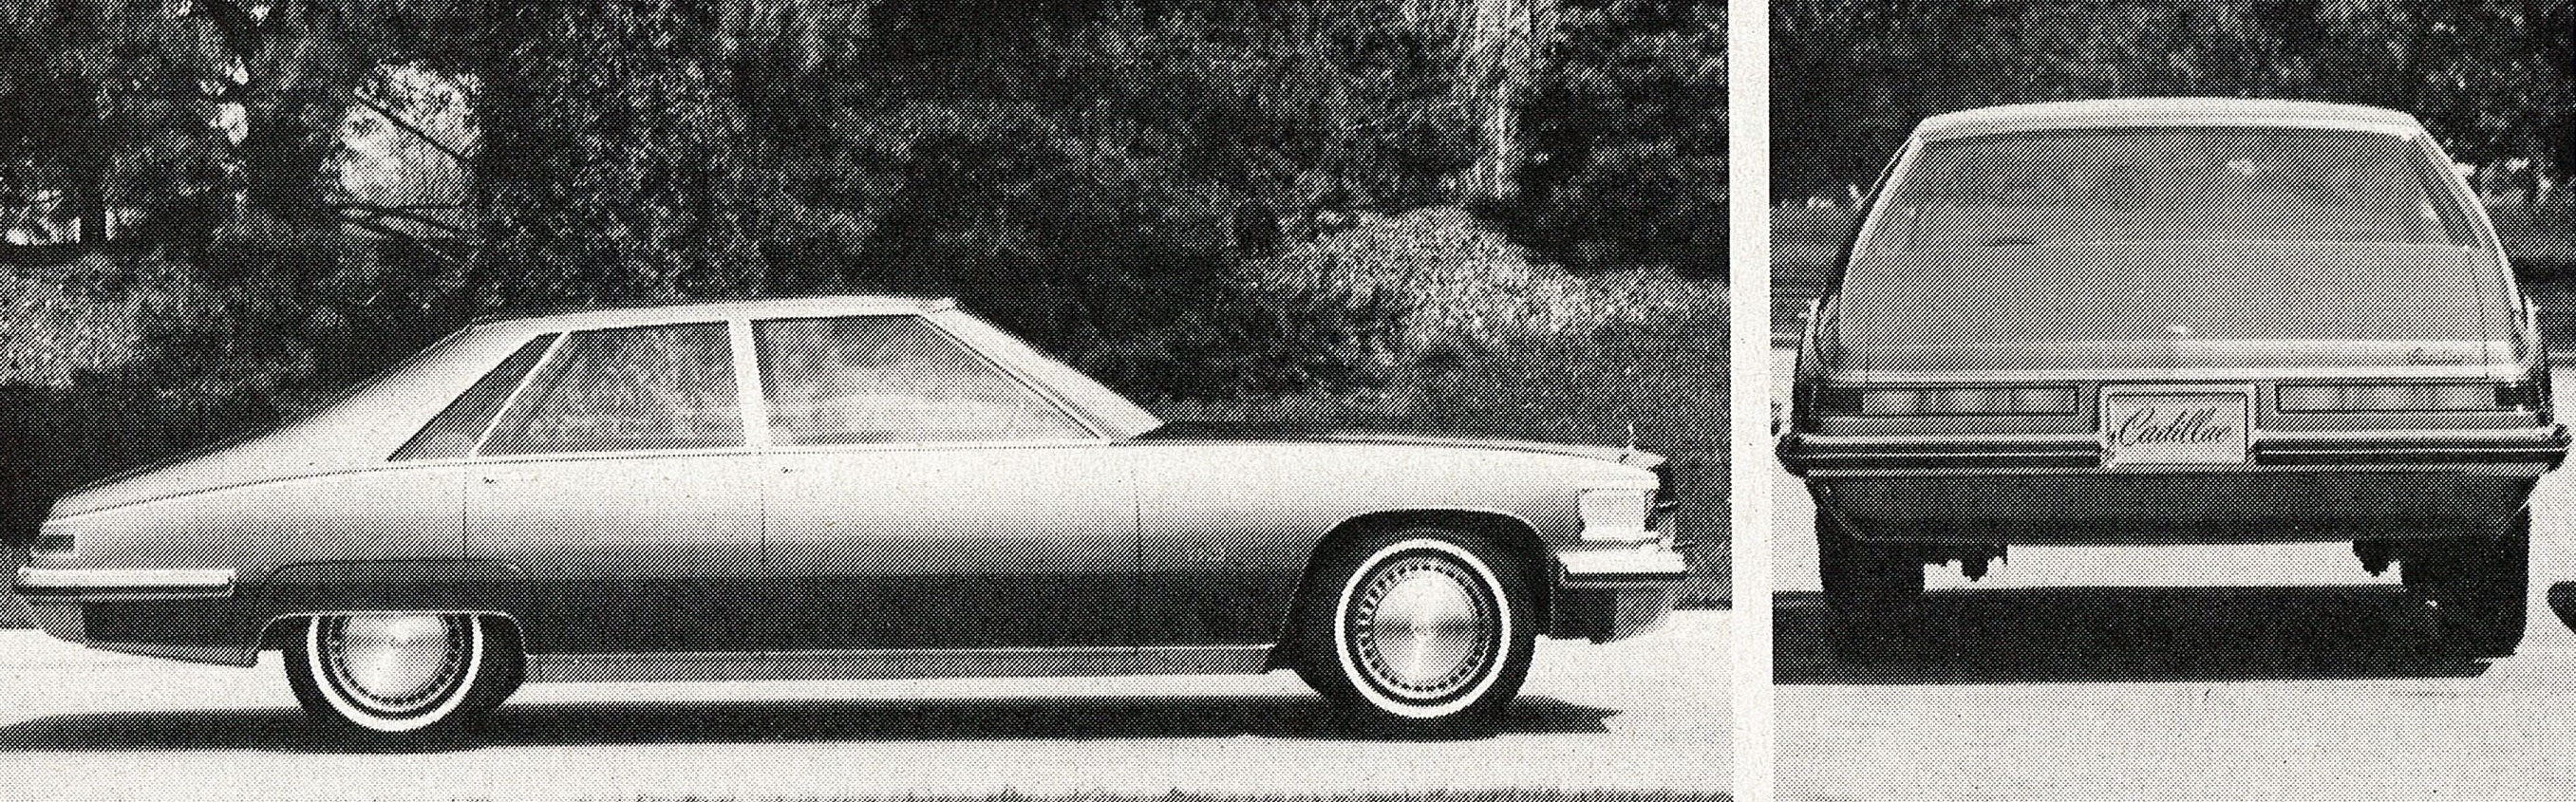 » 1973: Design proposals for the original Cadillac Seville